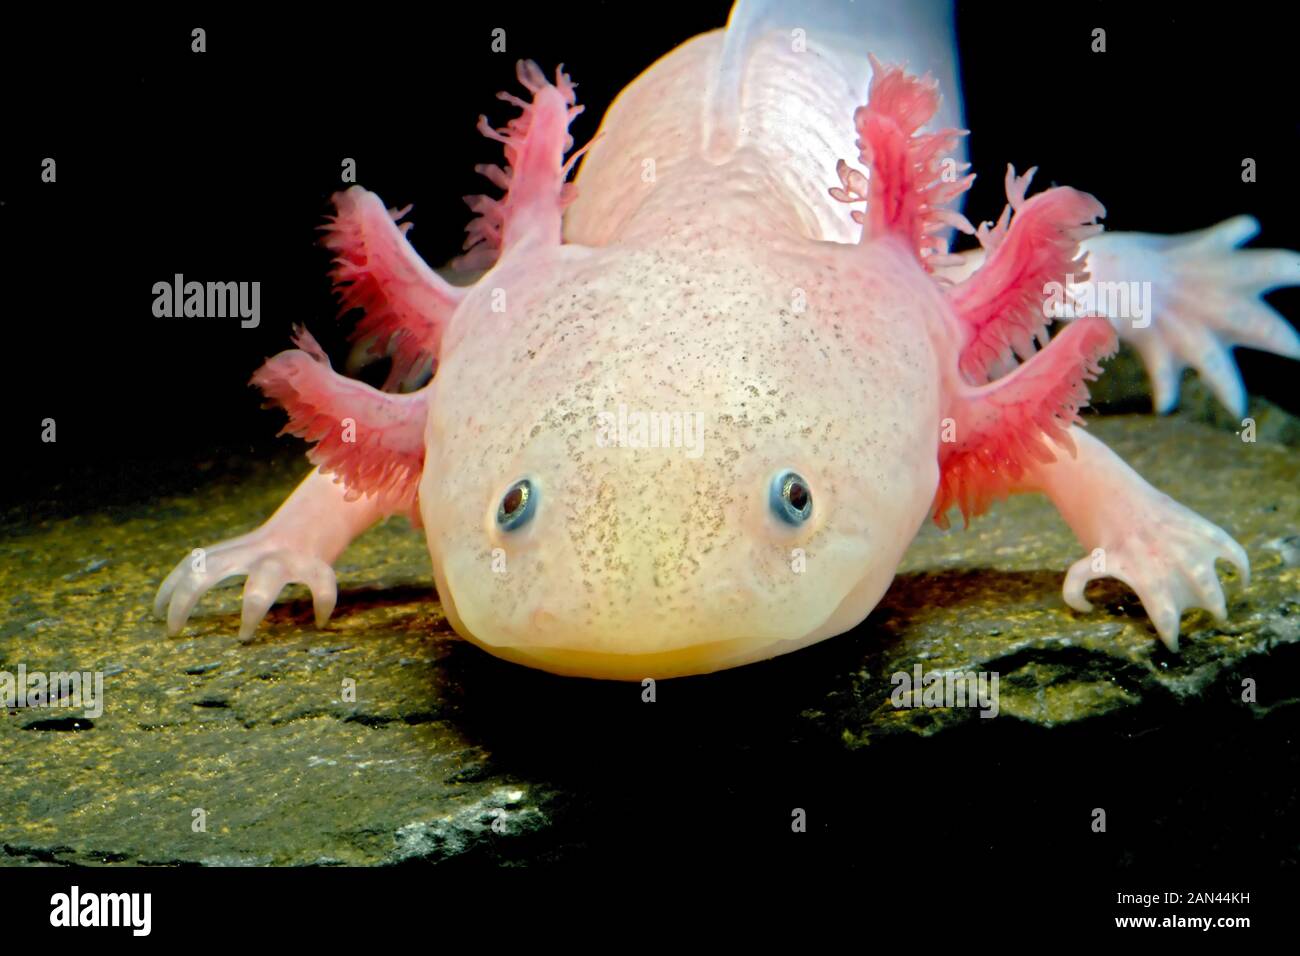 Axolotl, Amystoma mexicanum, bedrohte Arten, neotenische Arten, gefangen Stockfoto